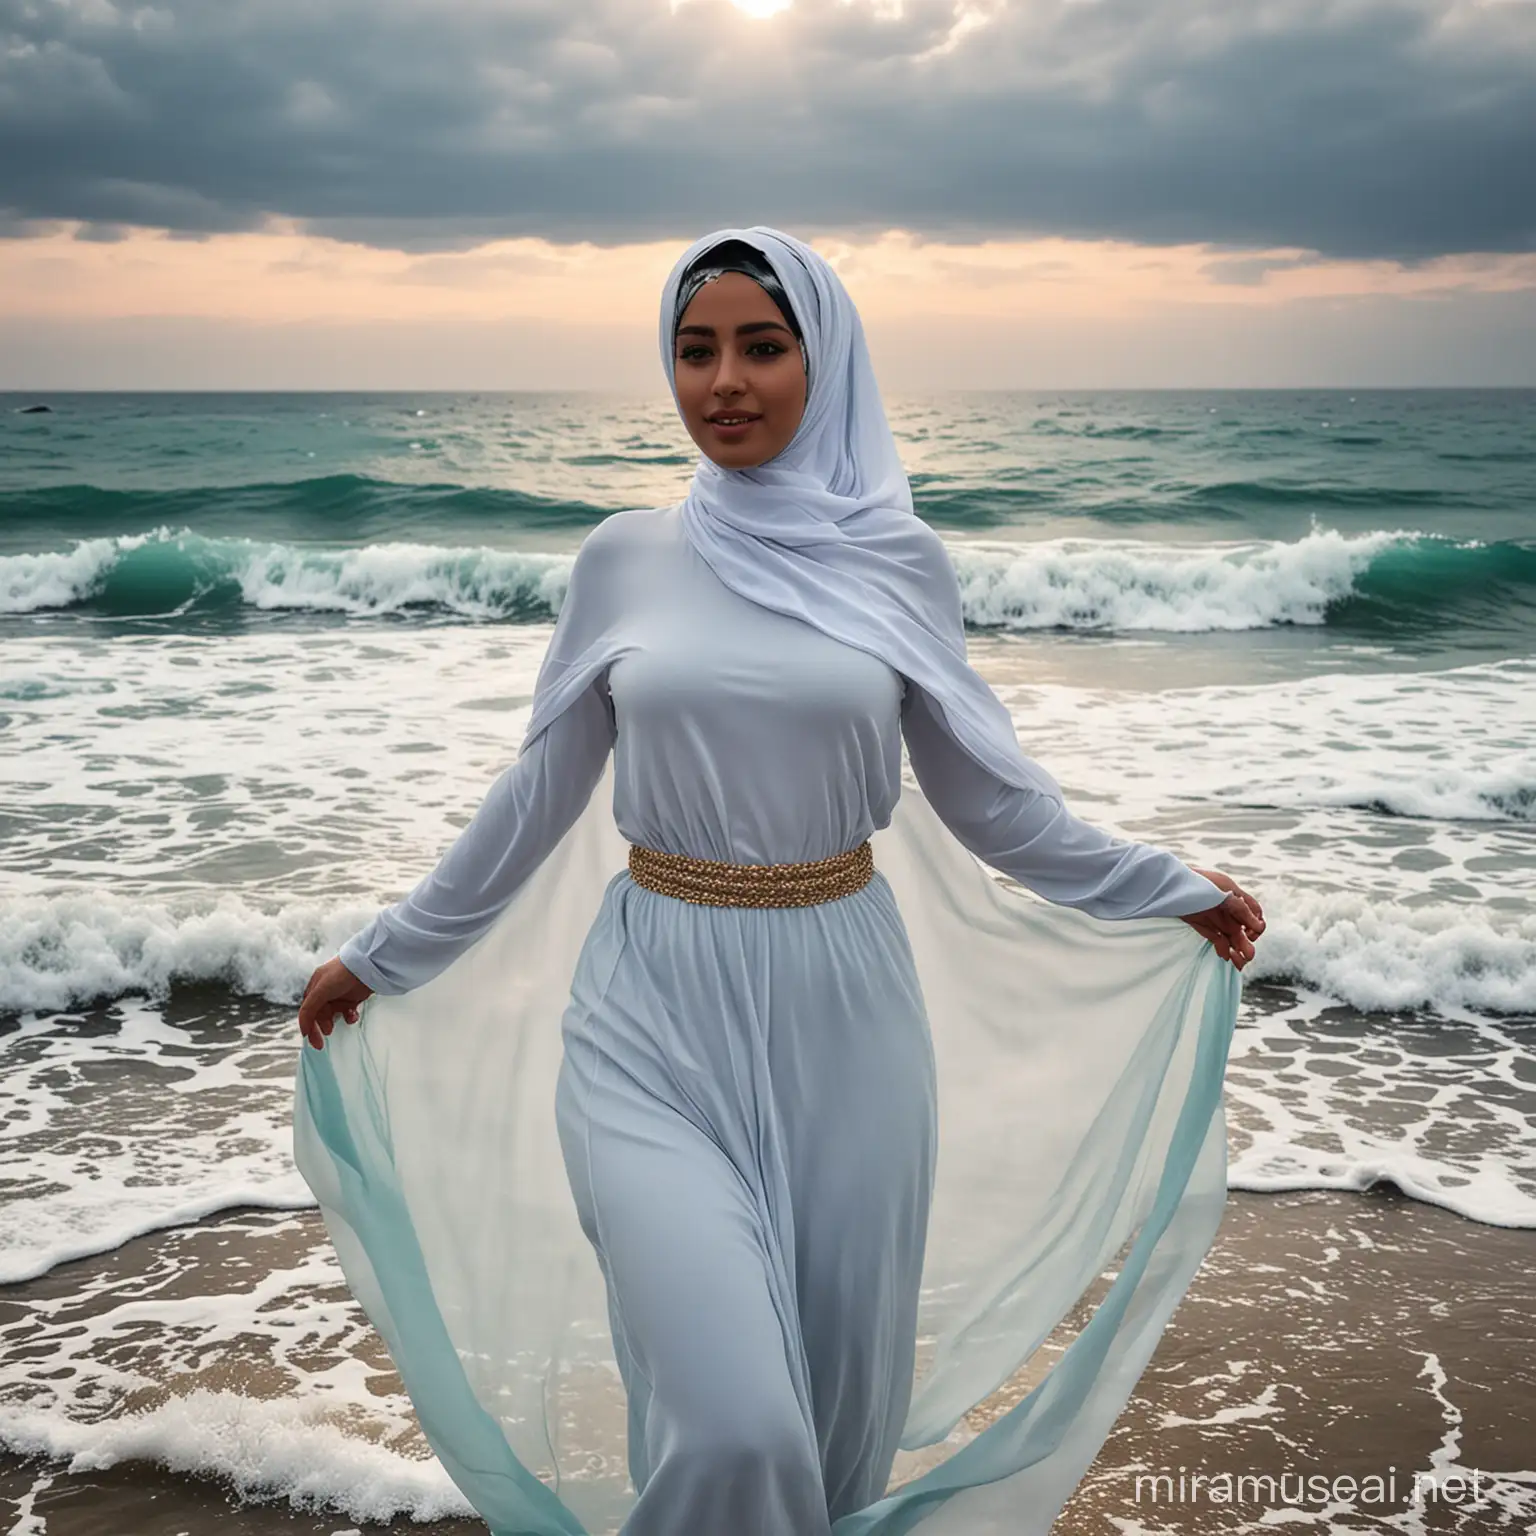 Muslim Woman in Hijab Enjoying Serenity by the Sea